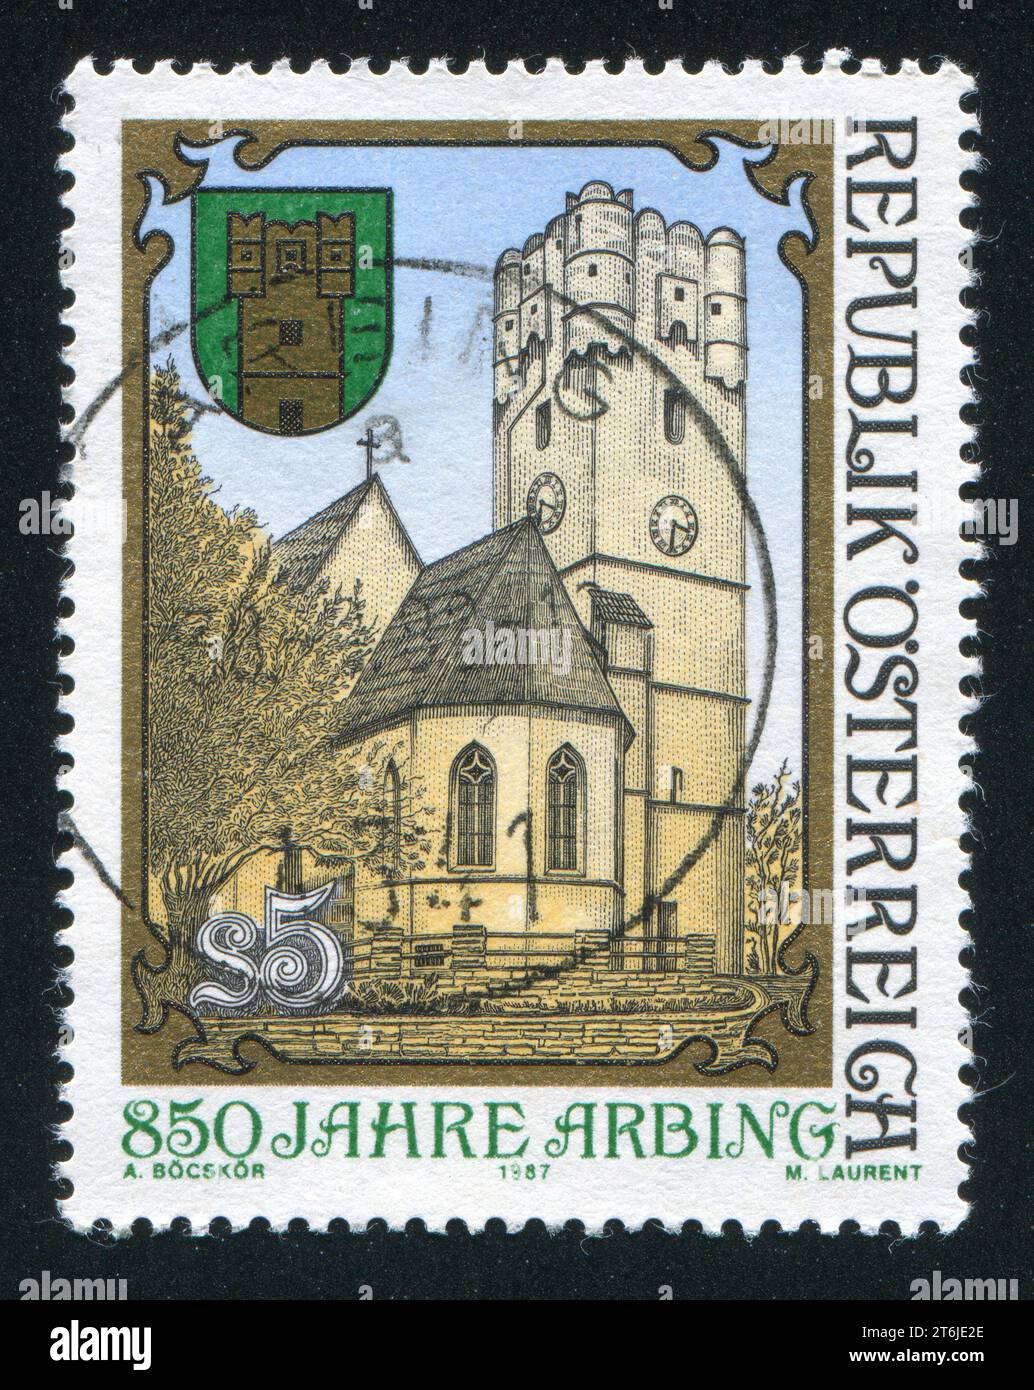 AUSTRIA - CIRCA 1987: stamp printed by Austria, shows Arbing, castle, circa 1987 Stock Photo